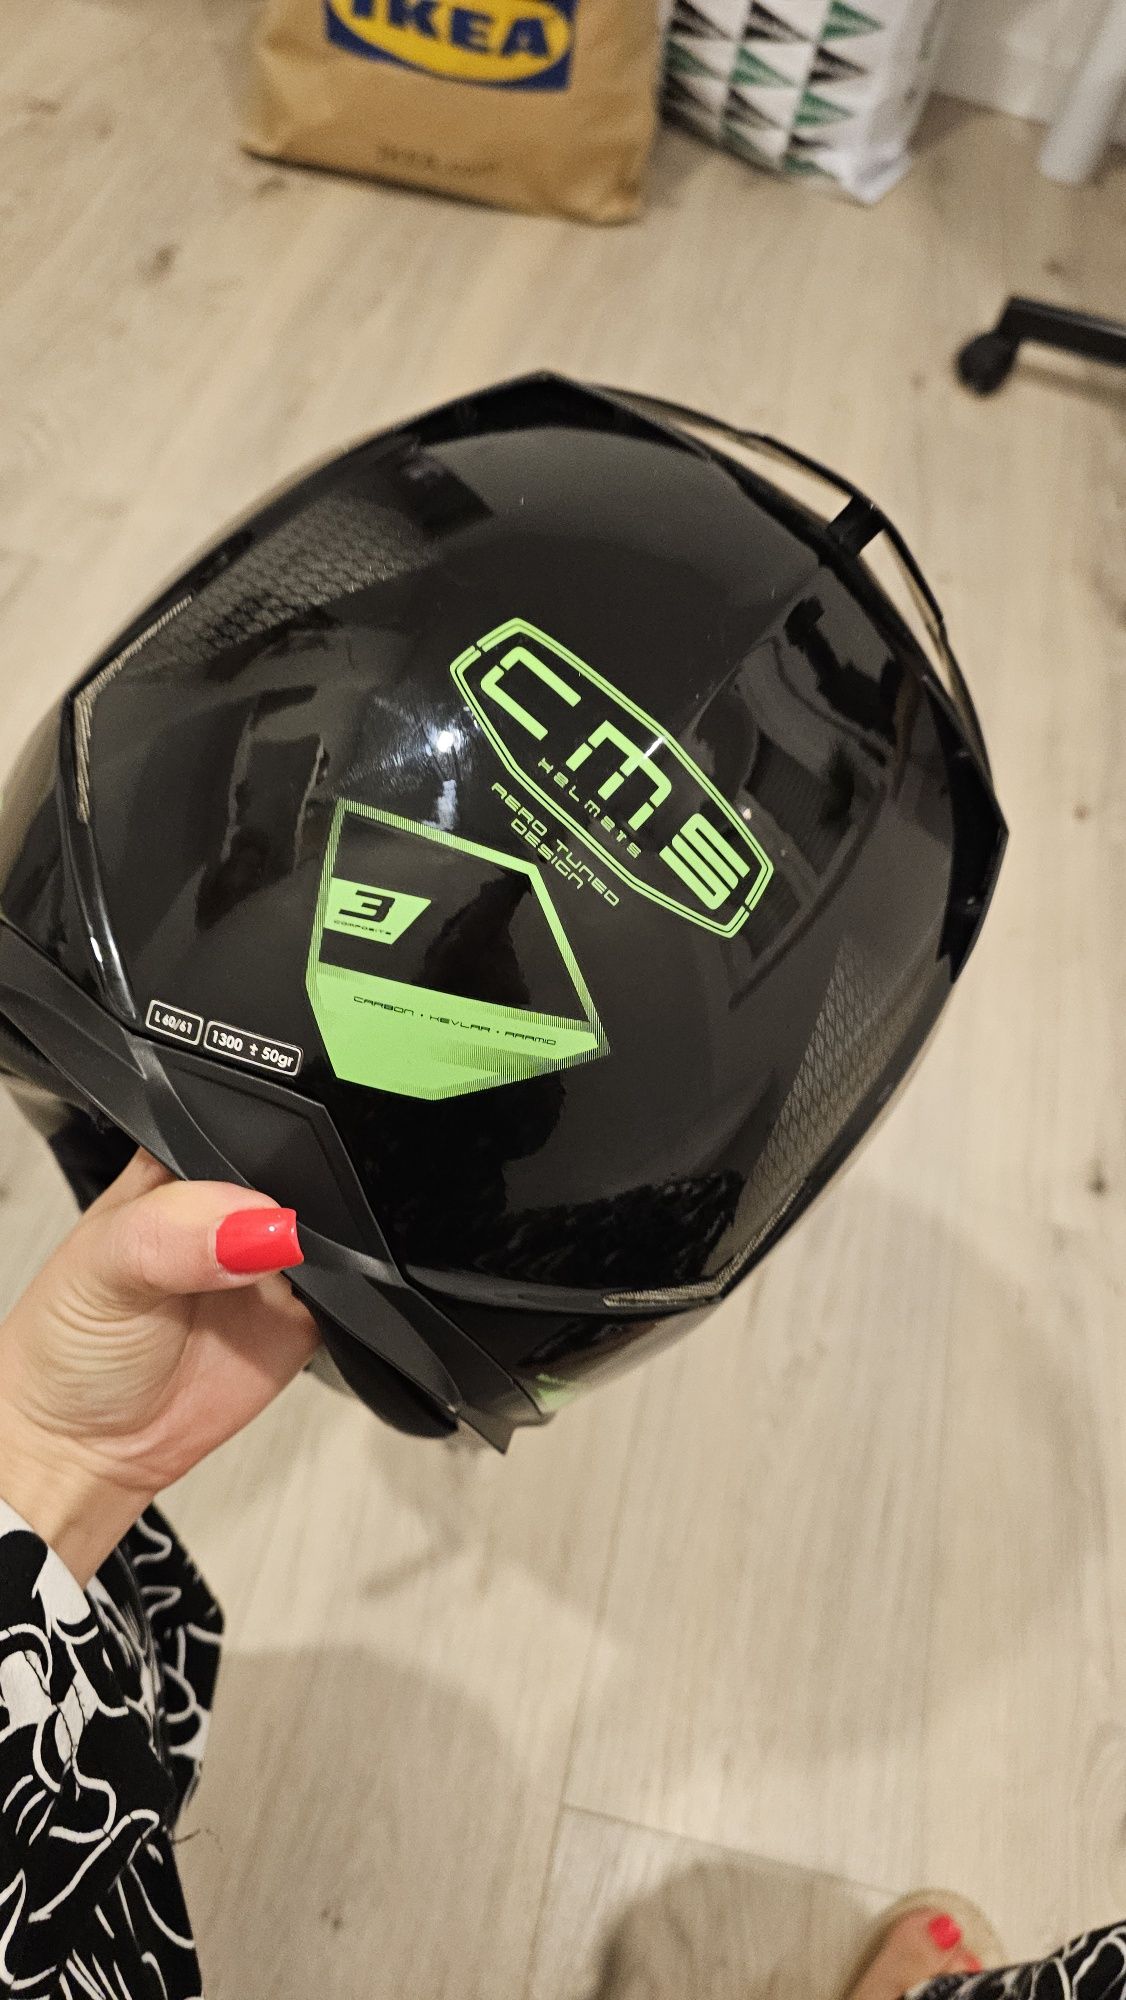 Capacete CMS Helmets